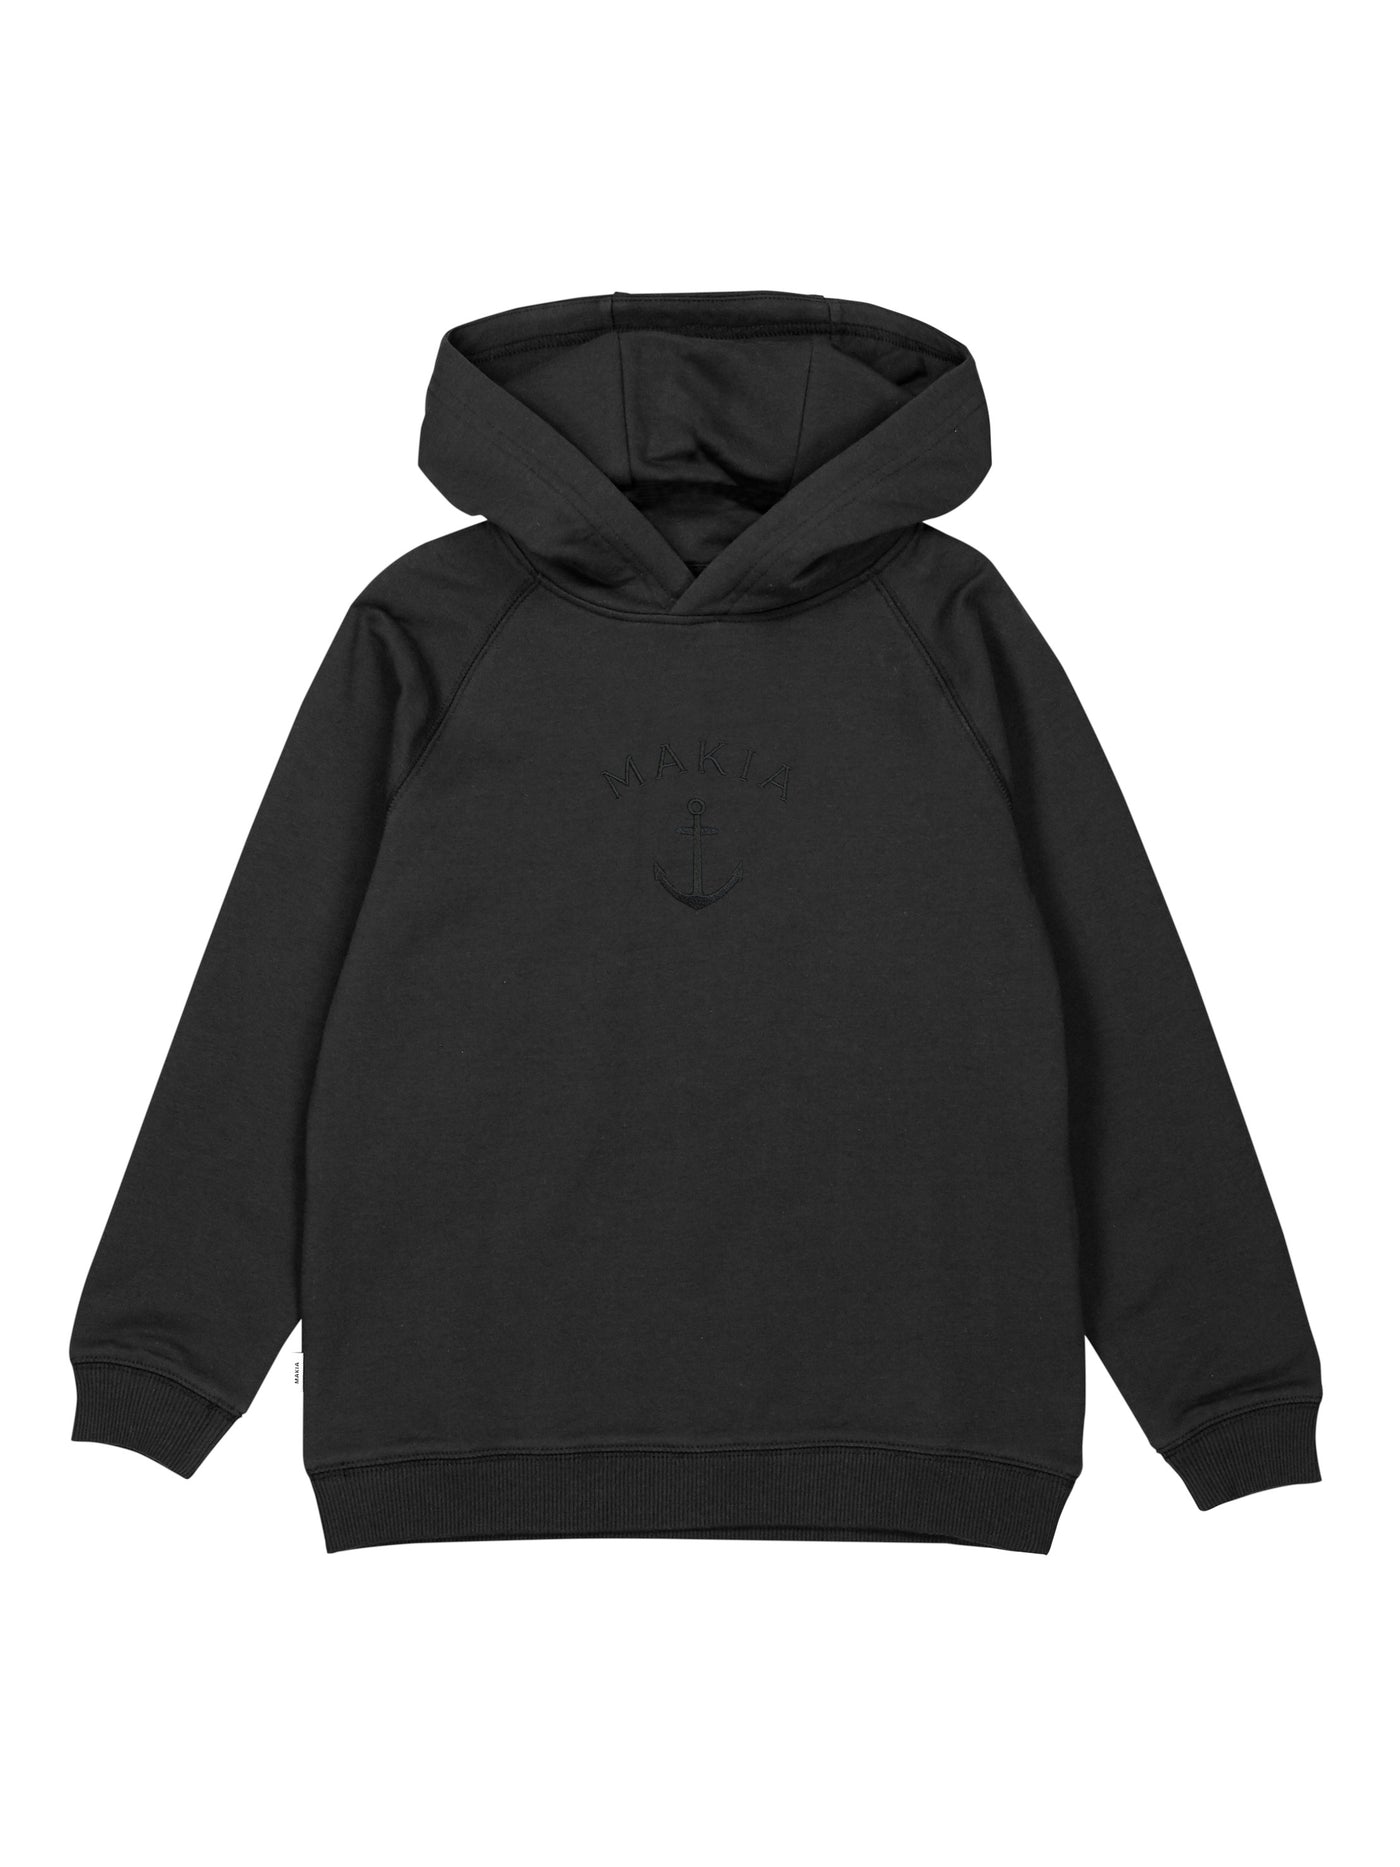 Folke Hooded Sweatshirt - Children's and youth's hoodie